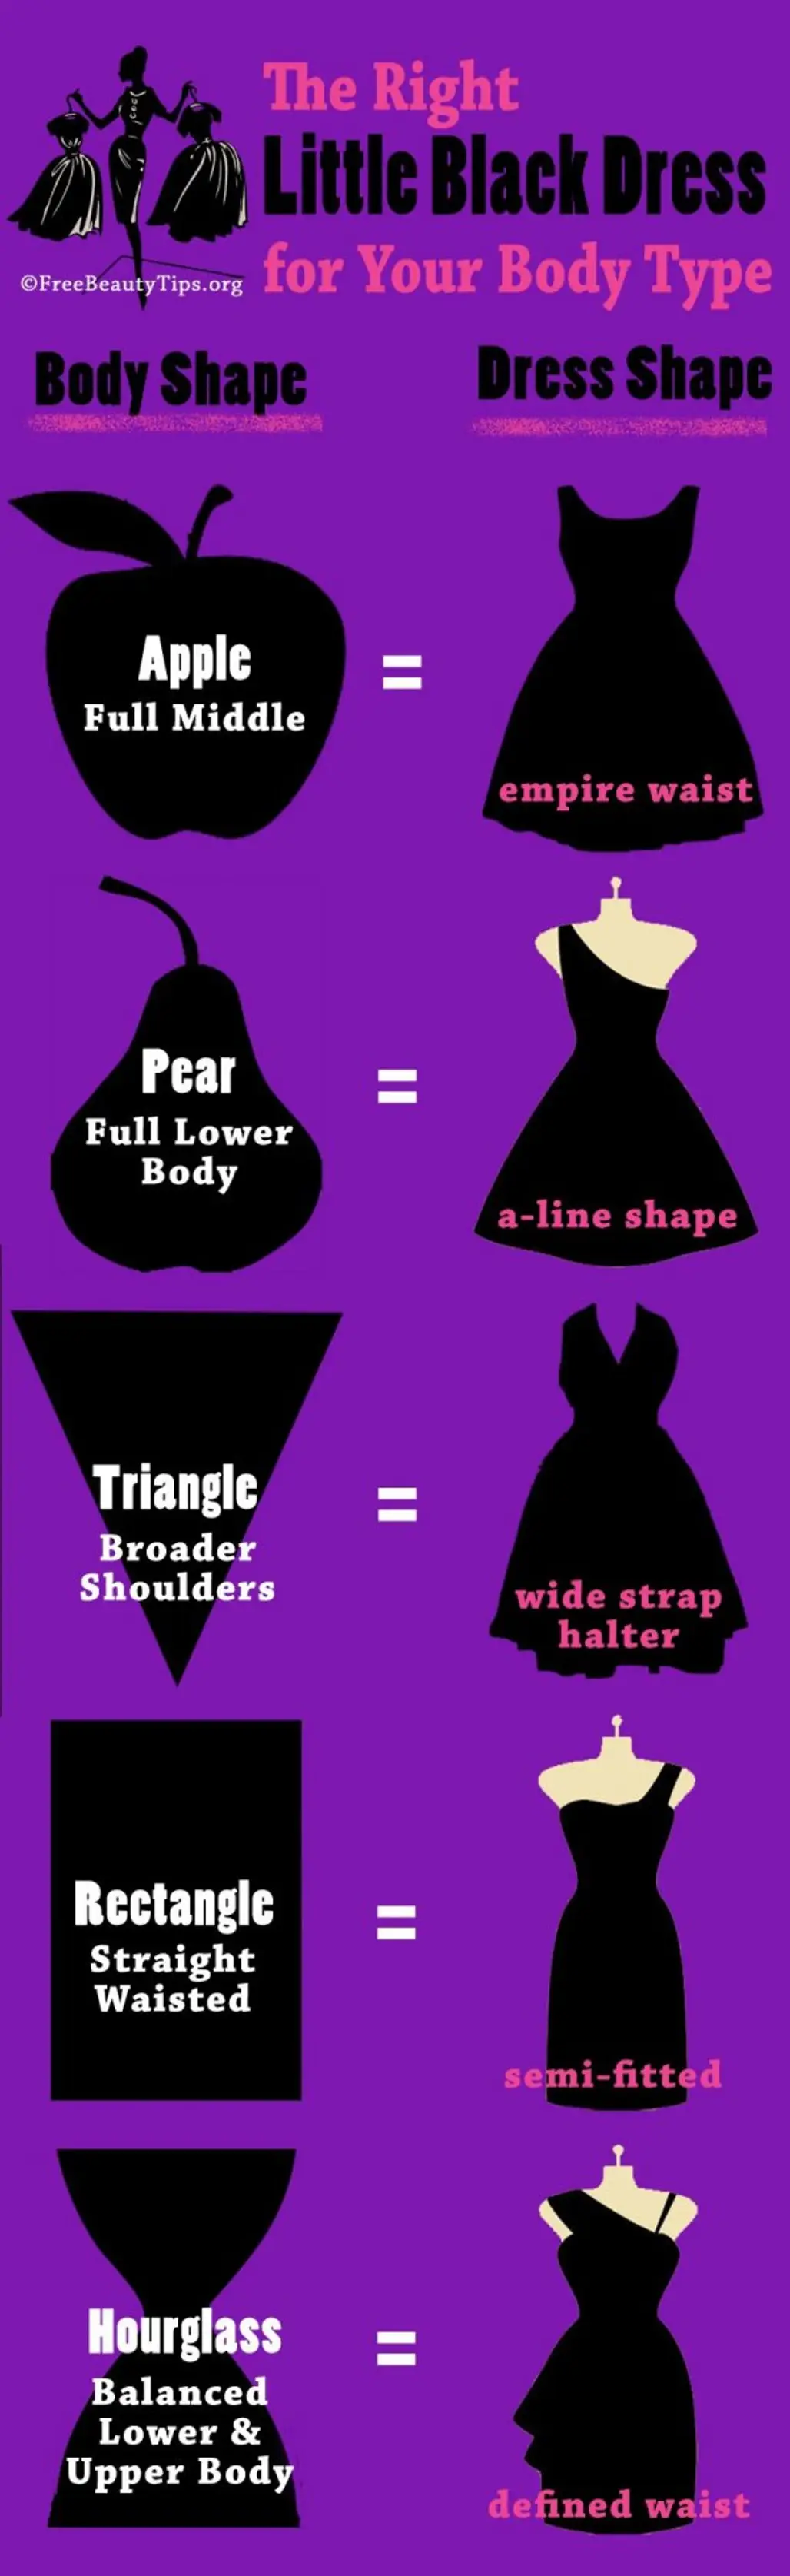 Little Black Dress Shapes by Body Type